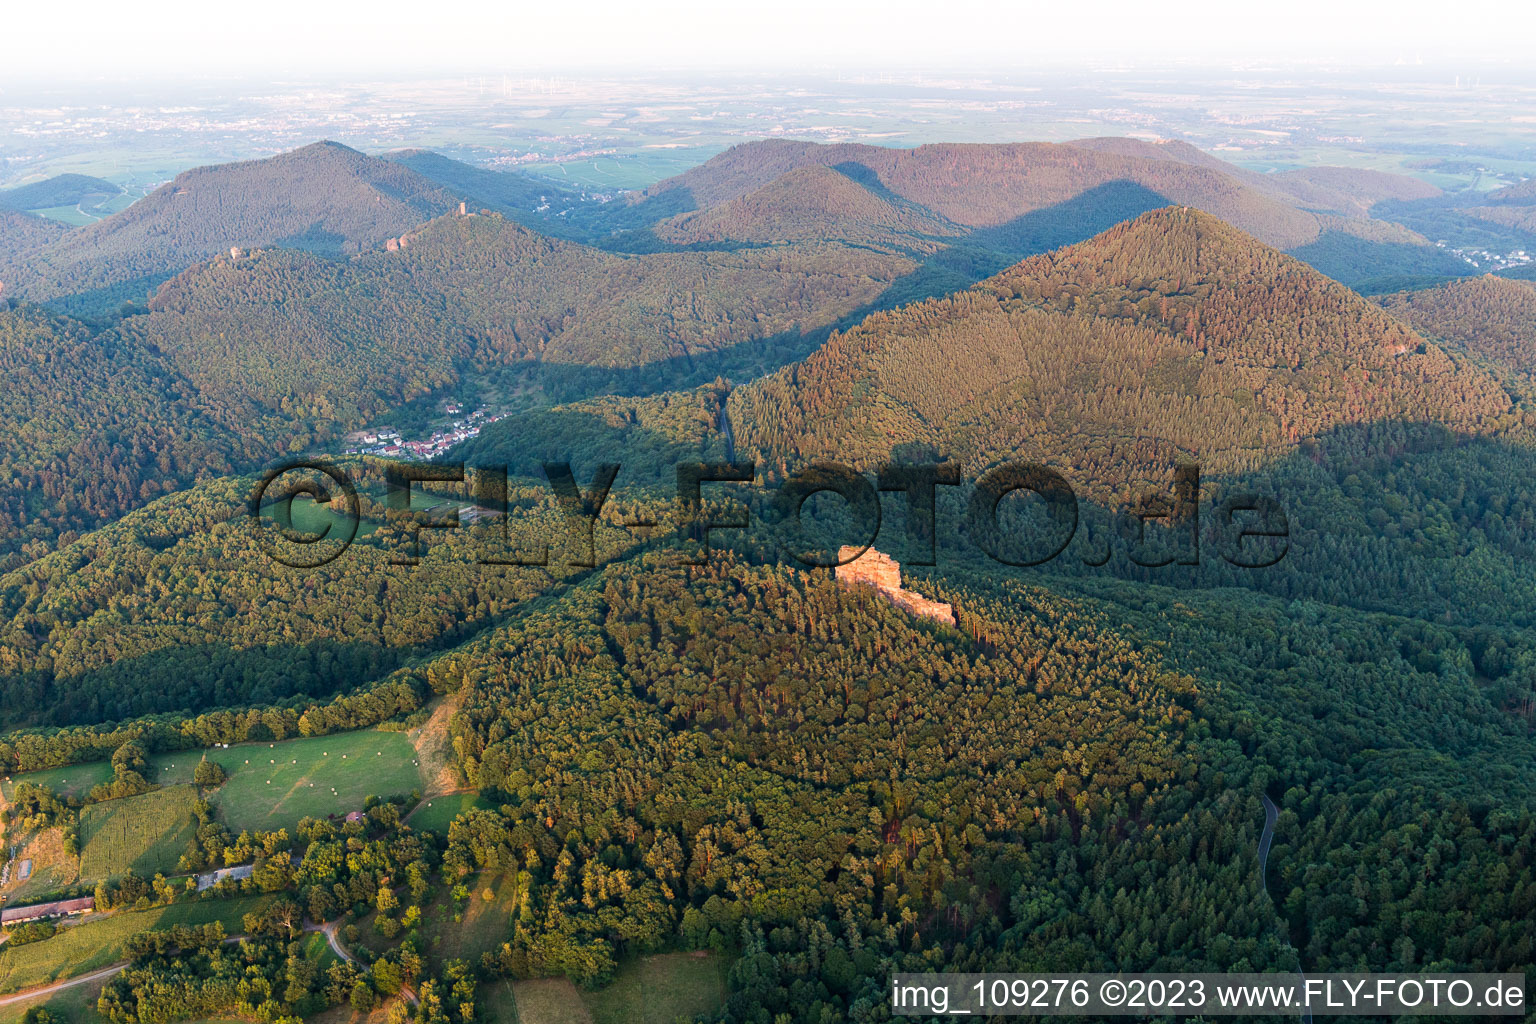 Aerial view of Wernersberg in the state Rhineland-Palatinate, Germany